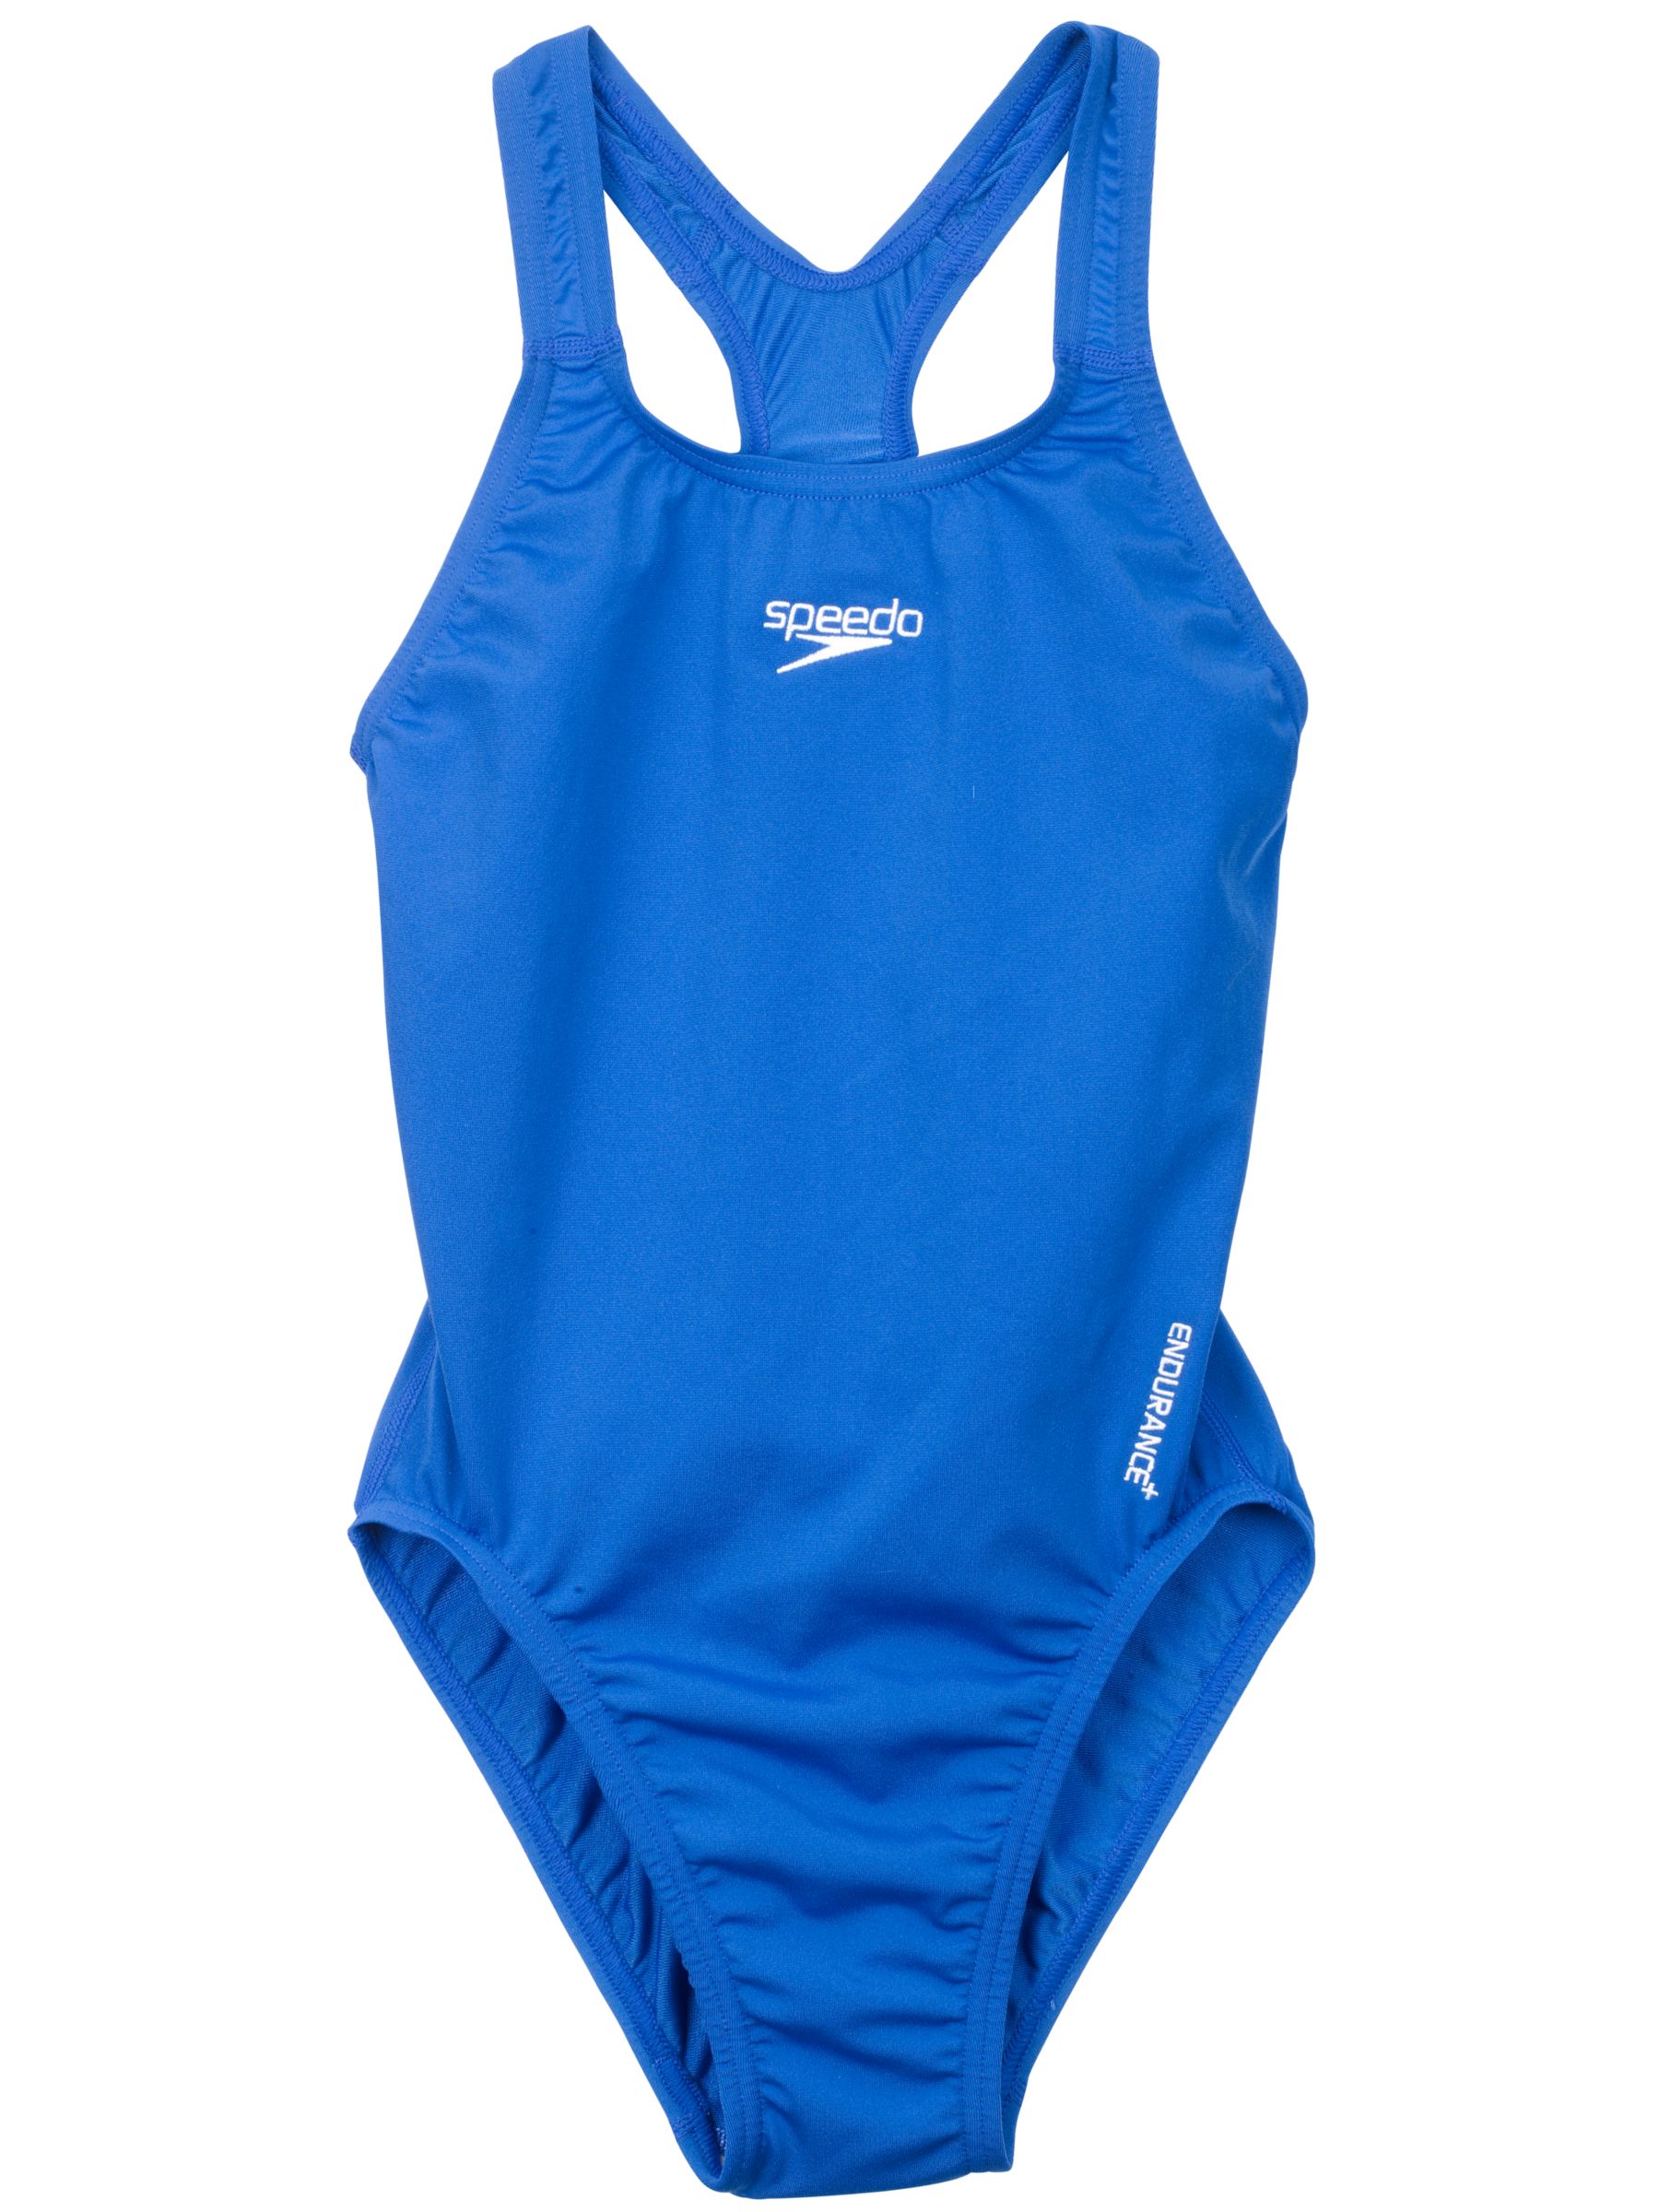 Speedo Medalist Swimsuit, Blue, 6 Years